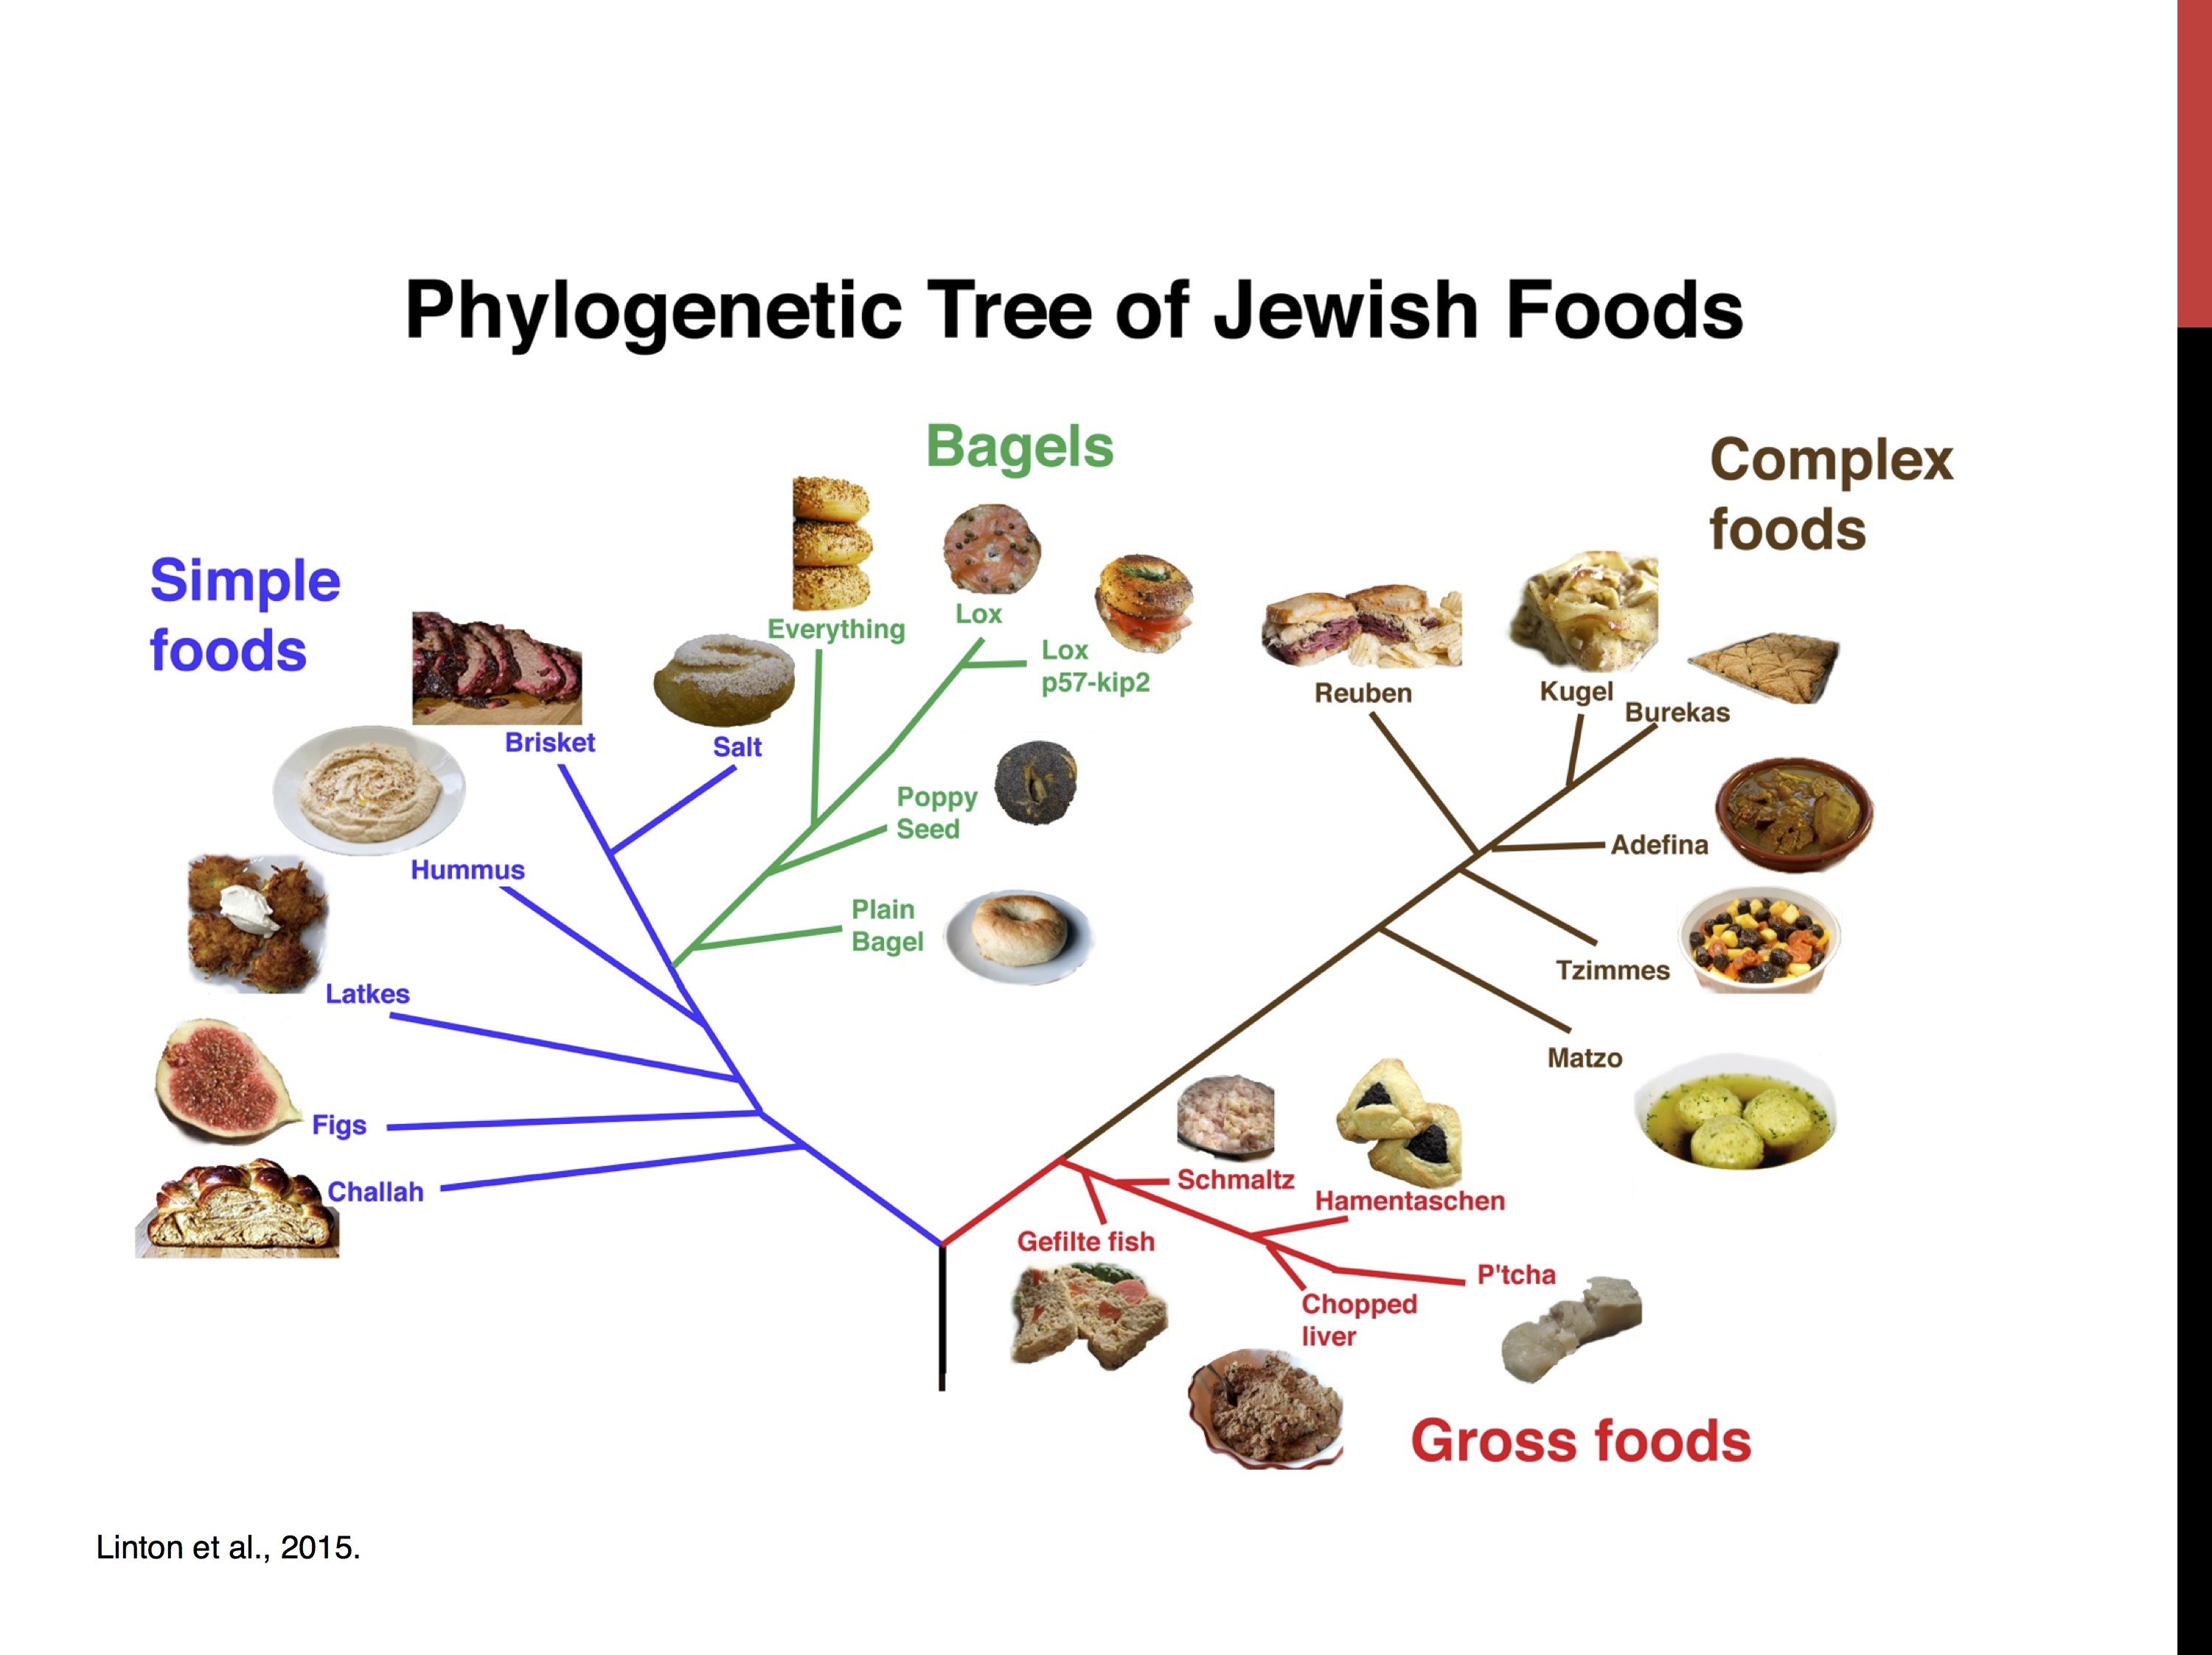 Phylogenetic tree of Jewish foods